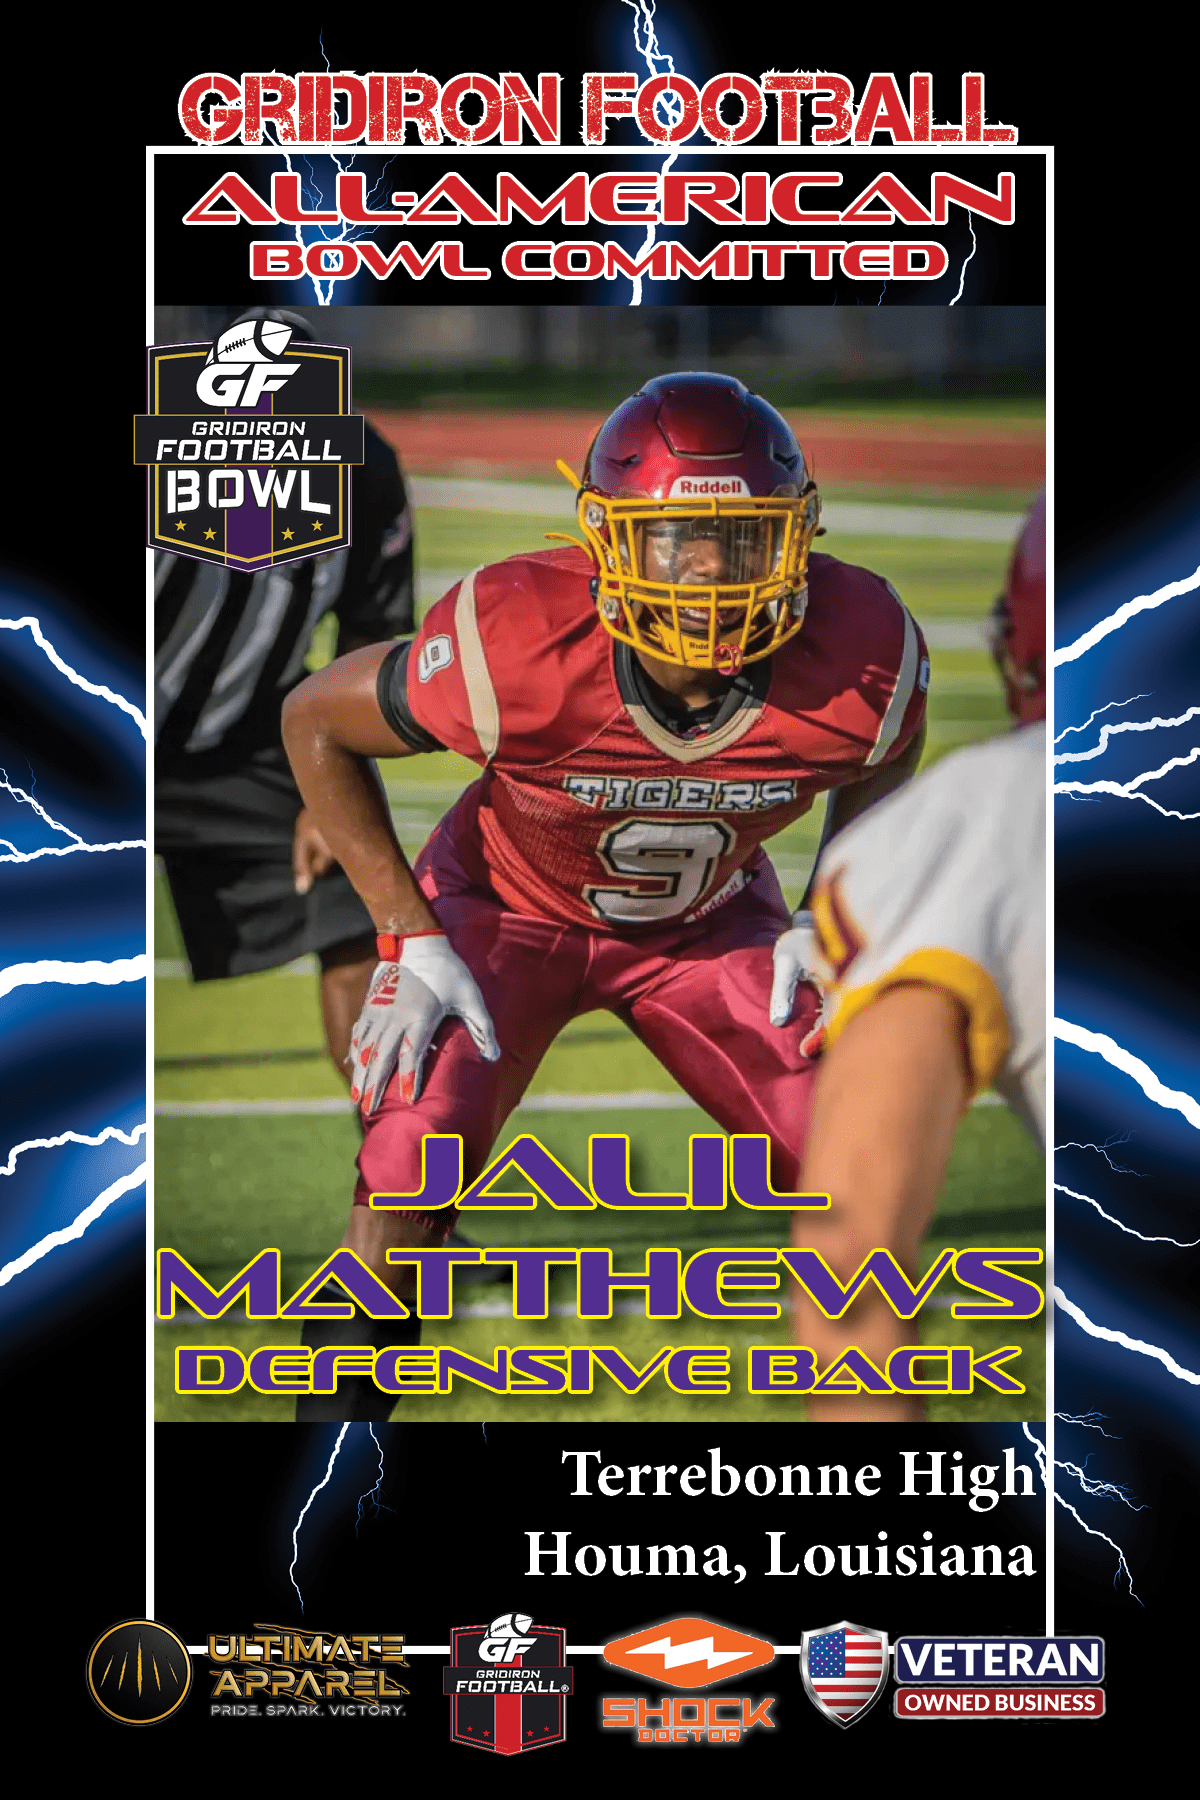 BREAKING NEWS: Terrebonne High School (Houma, La.) DB Jalil Matthews commits to Gridiron Football All-American Bowl